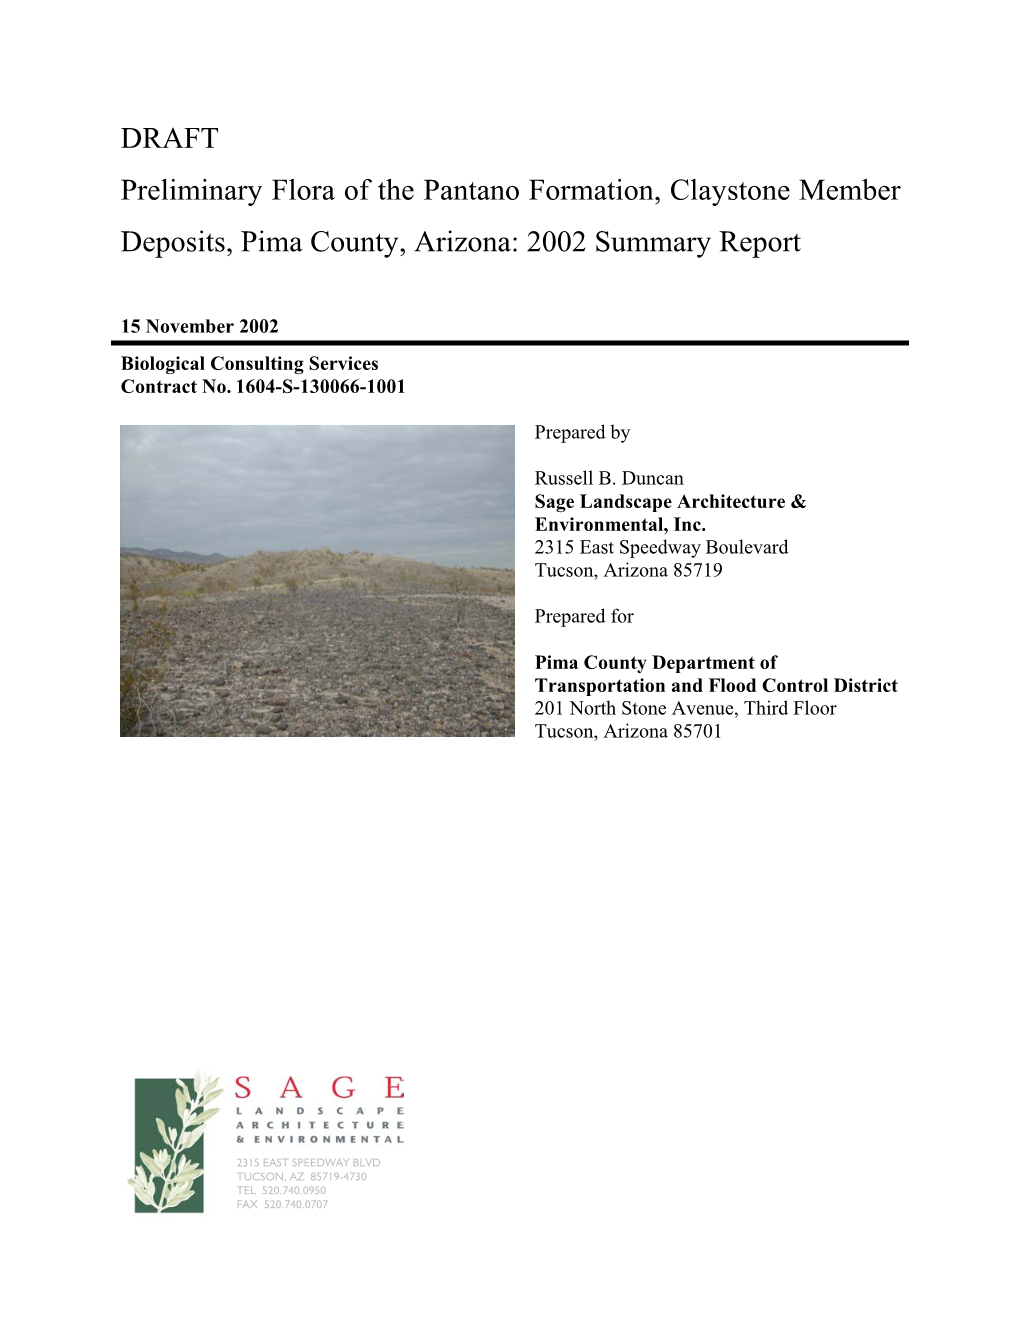 DRAFT Preliminary Flora of the Pantano Formation, Claystone Member Deposits, Pima County, Arizona: 2002 Summary Report